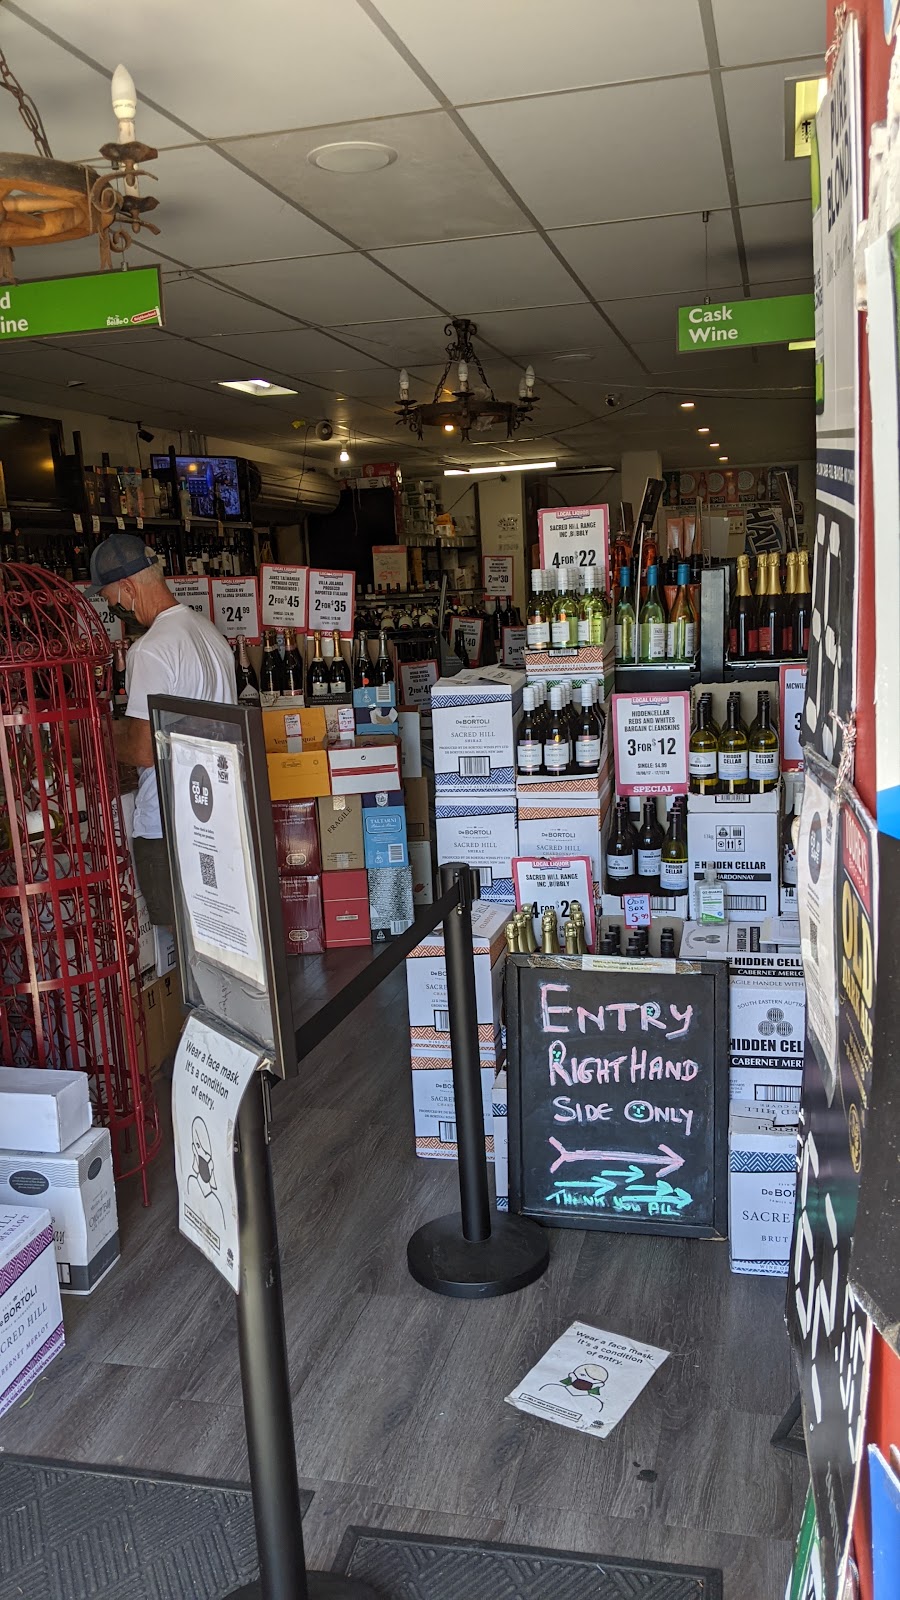 South West Rocks Cellars | liquor store | 15 Paragon Ave, South West Rocks NSW 2431, Australia | 0265666162 OR +61 2 6566 6162